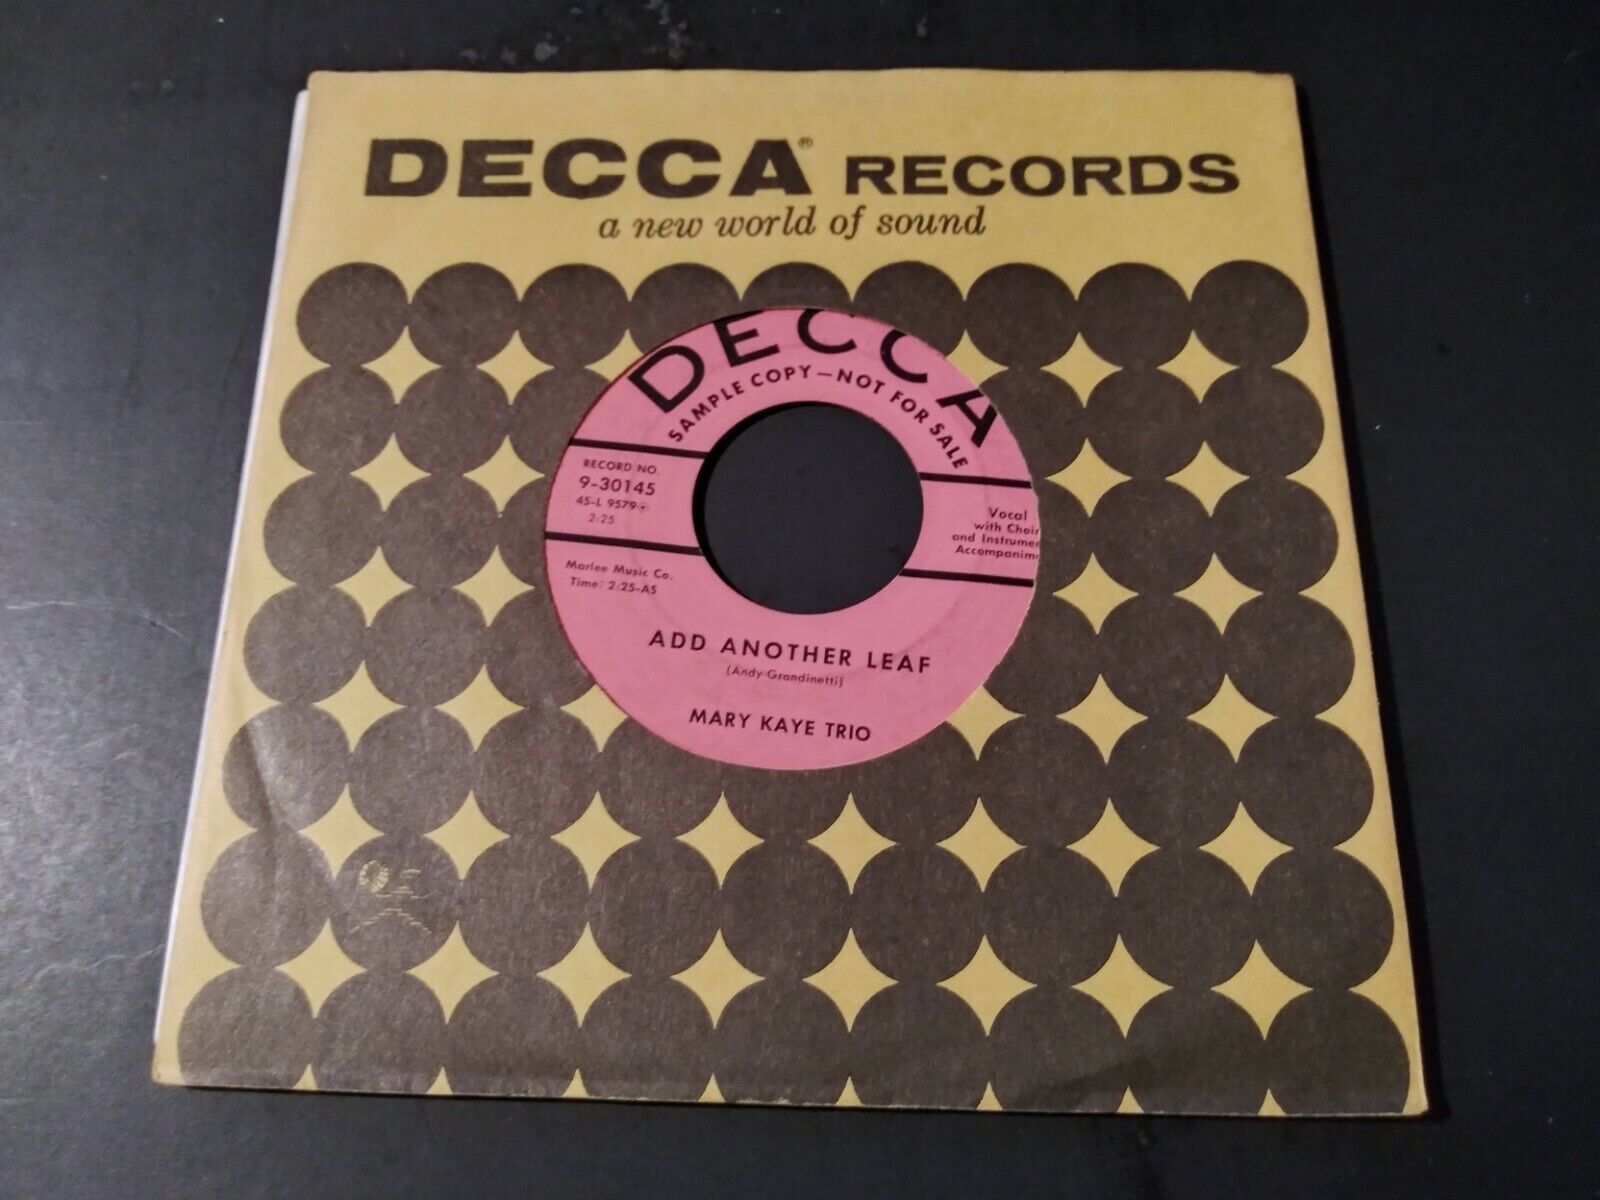 Mary Kaye Trio - Fools Rush In VG Promo Decca 45RPM 30145 Record 1956 Jazz Vocal